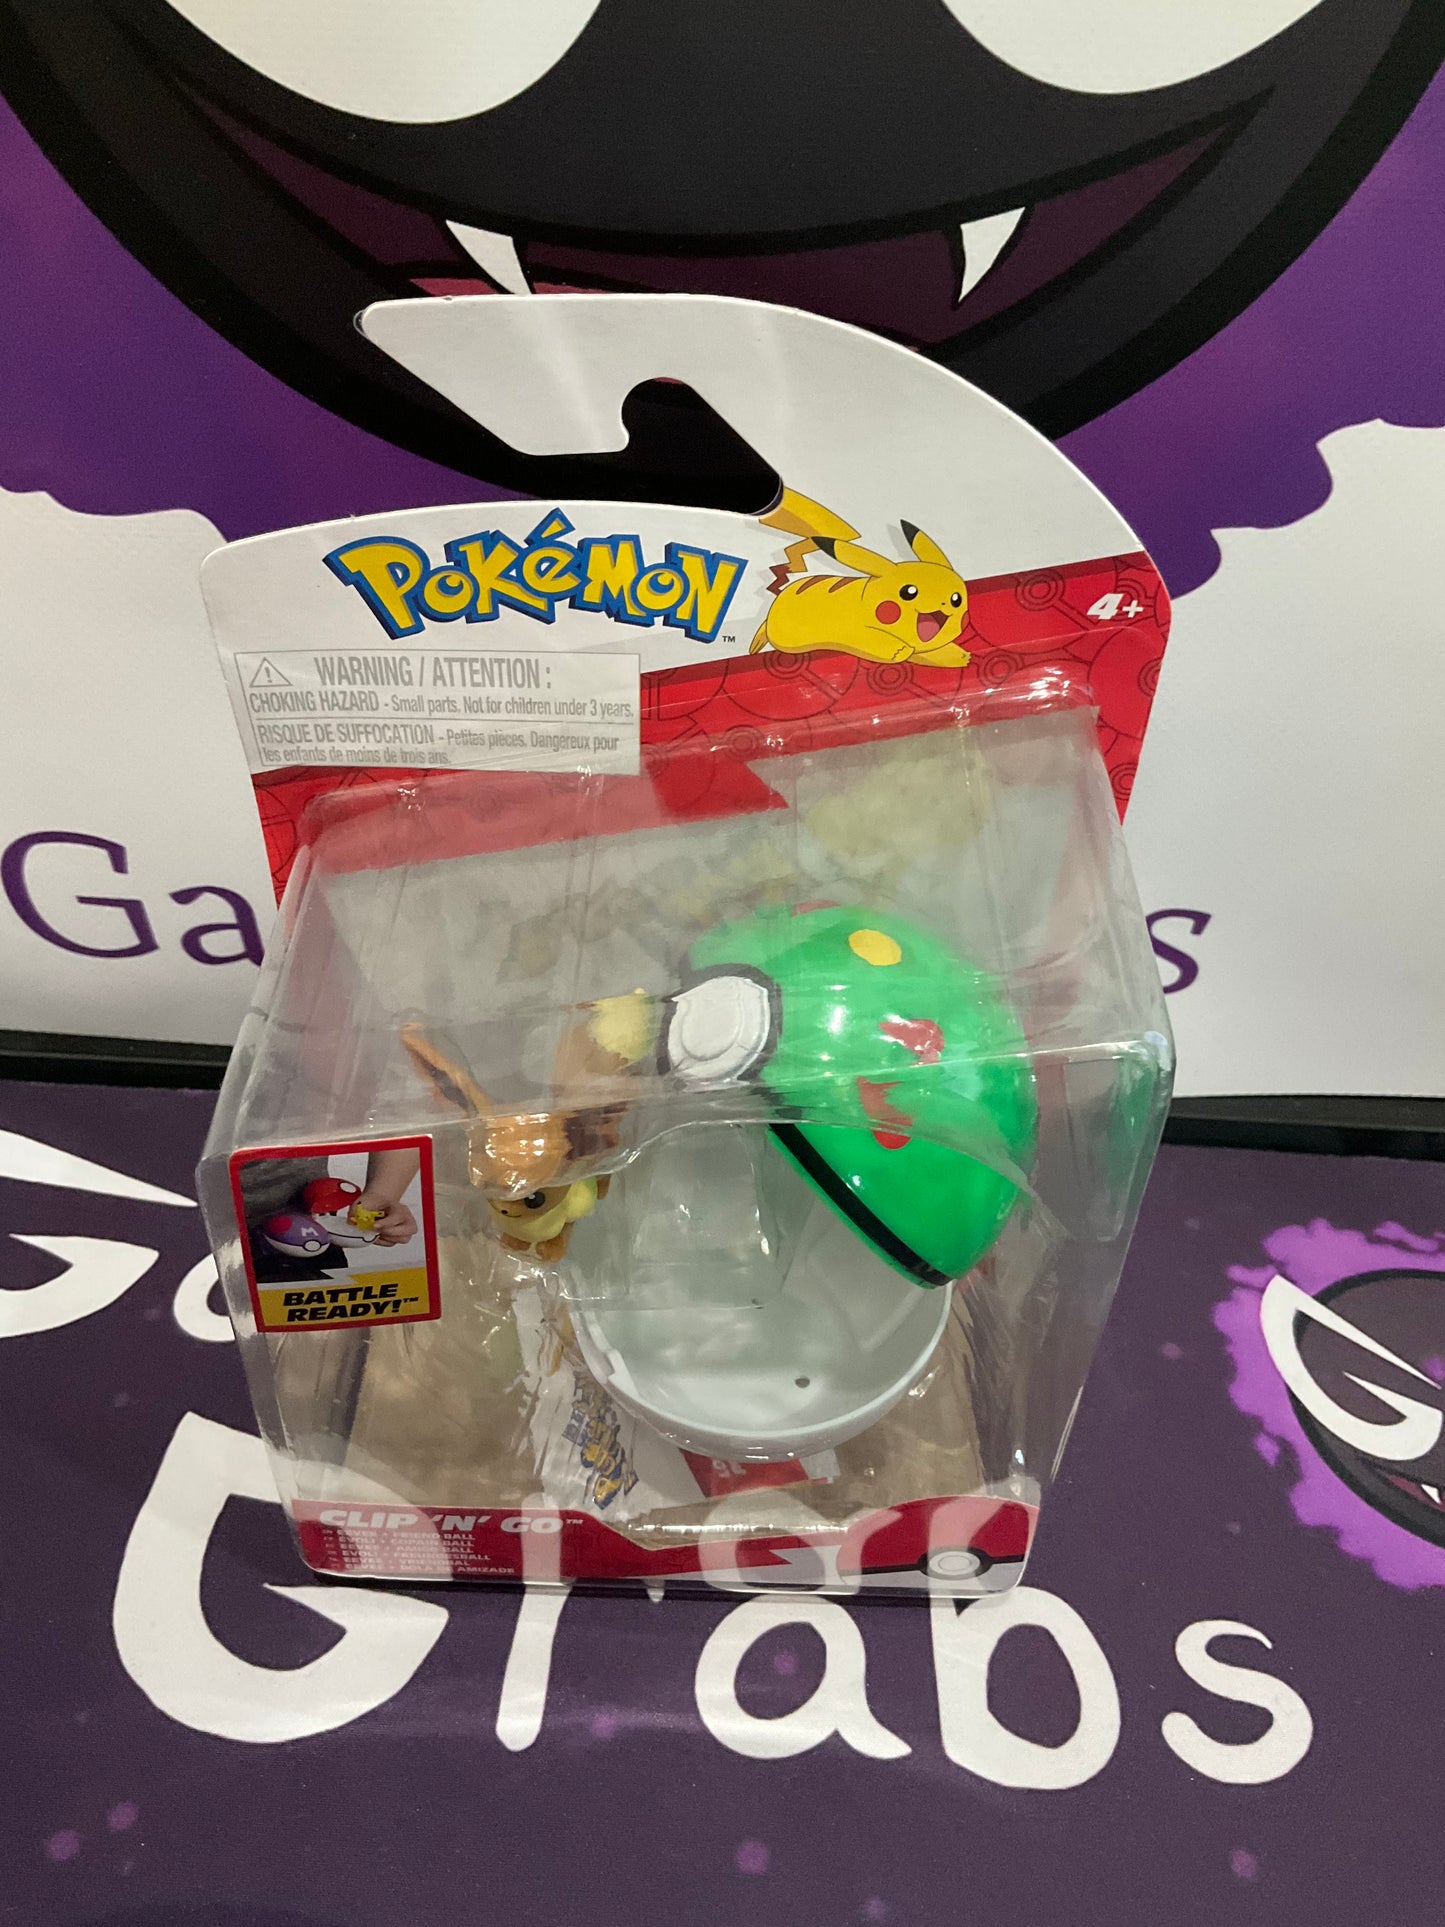 Pokémon Clip N Go Eevee and Friend Ball Toy Figure